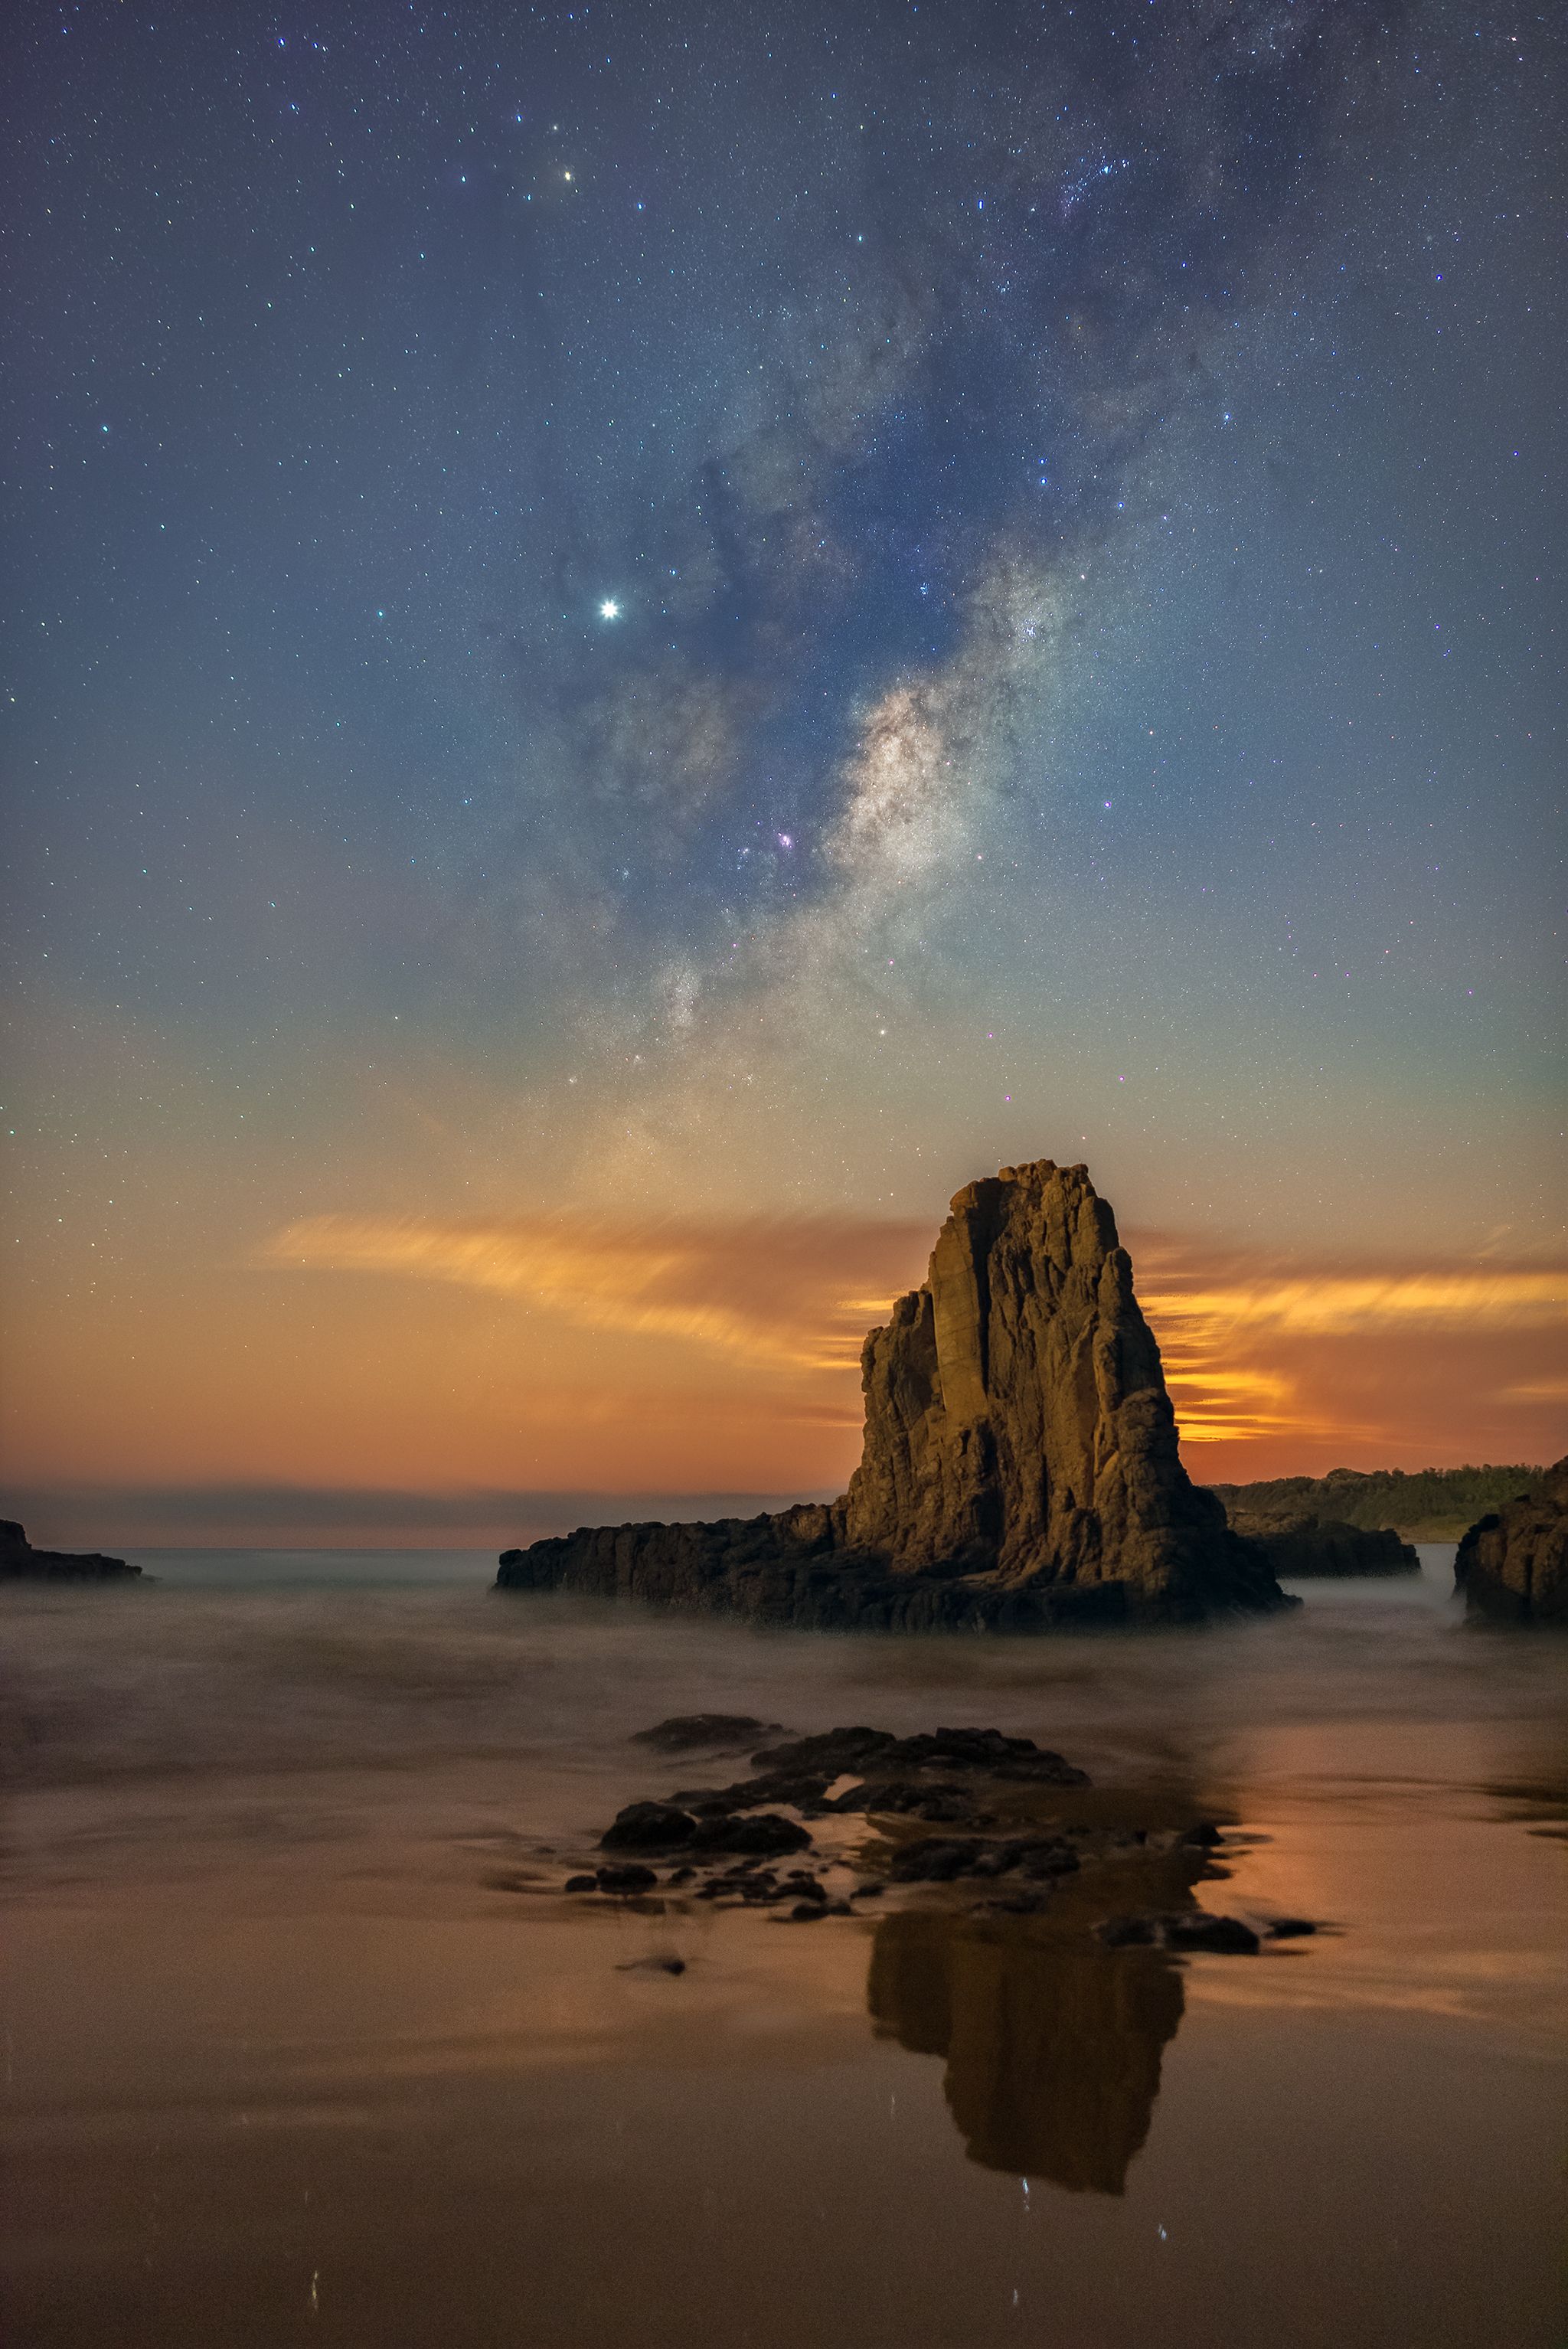 #australia #love #dunes #milkyway #night #stars #nightscape #nightsky #starry #ocean, Imagery Fascinating